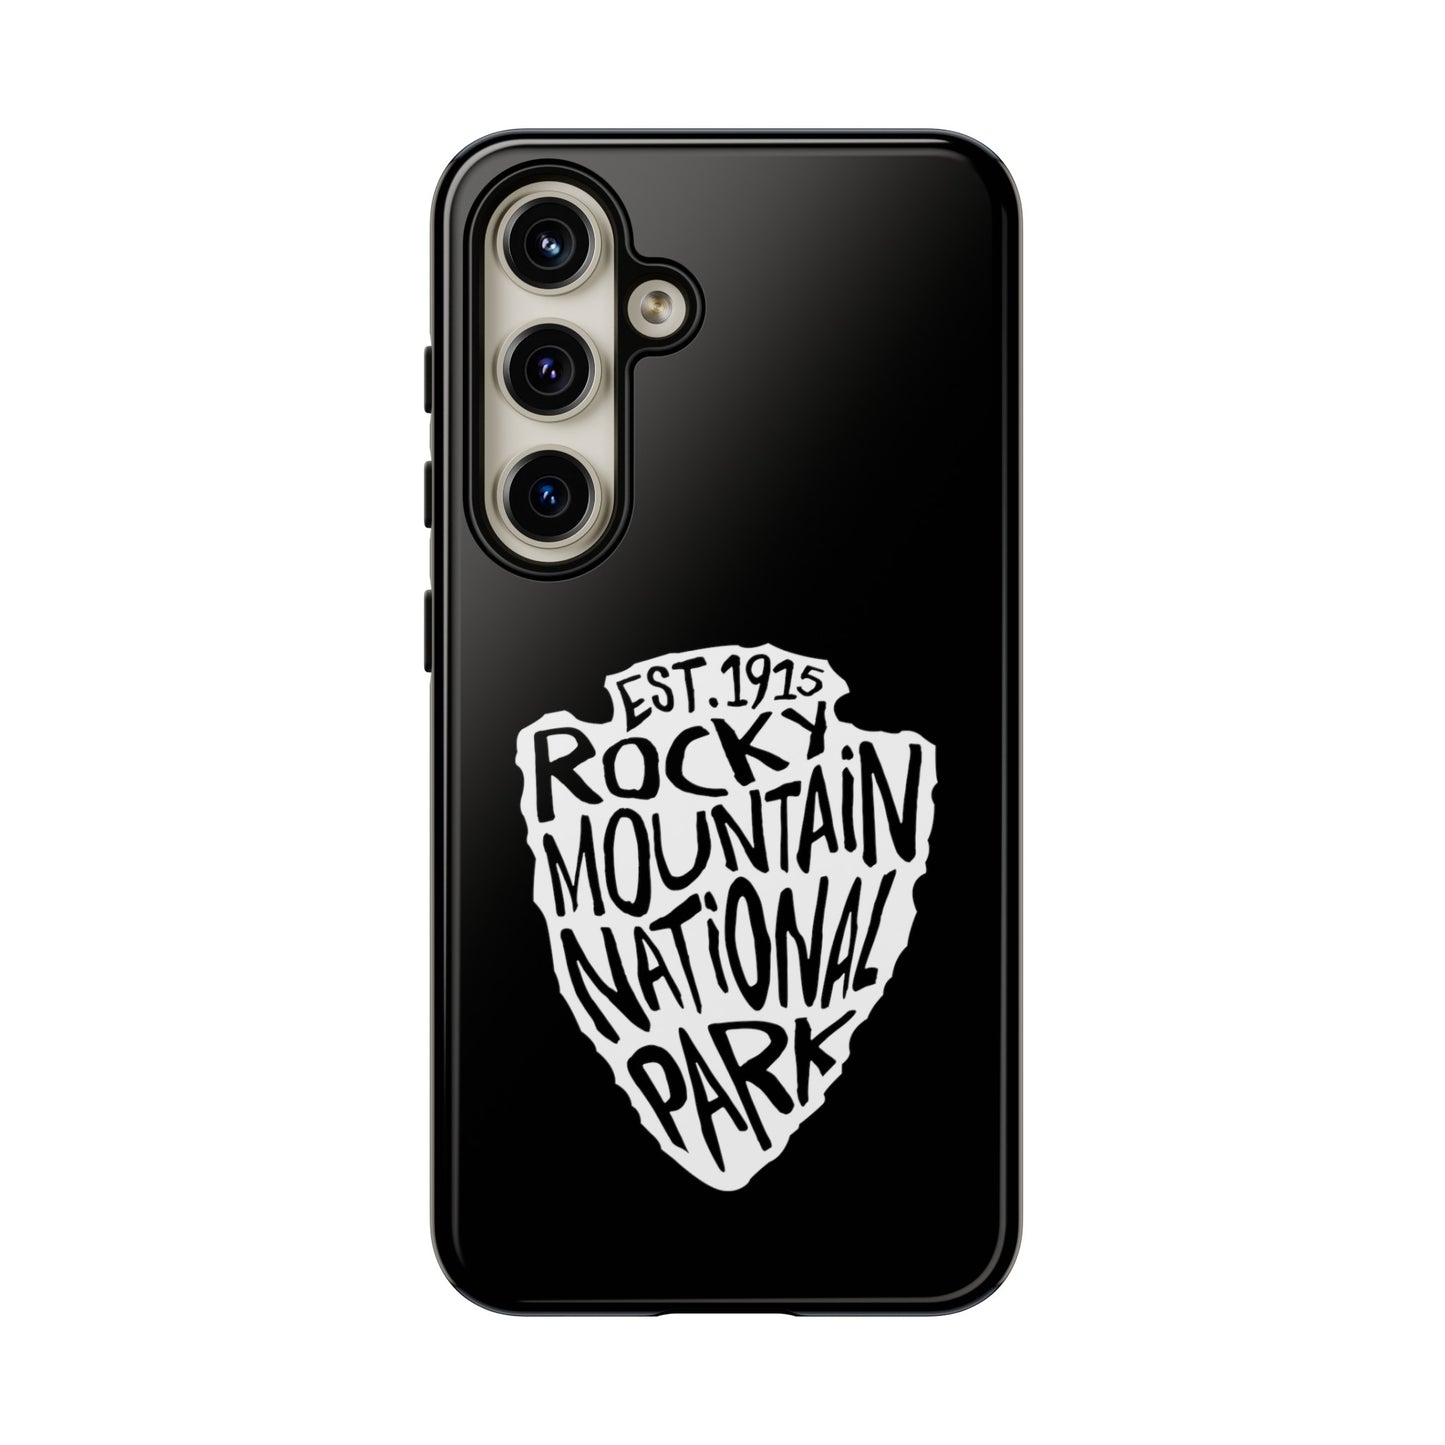 Rocky Mountain National Park Phone Case - Arrowhead Design